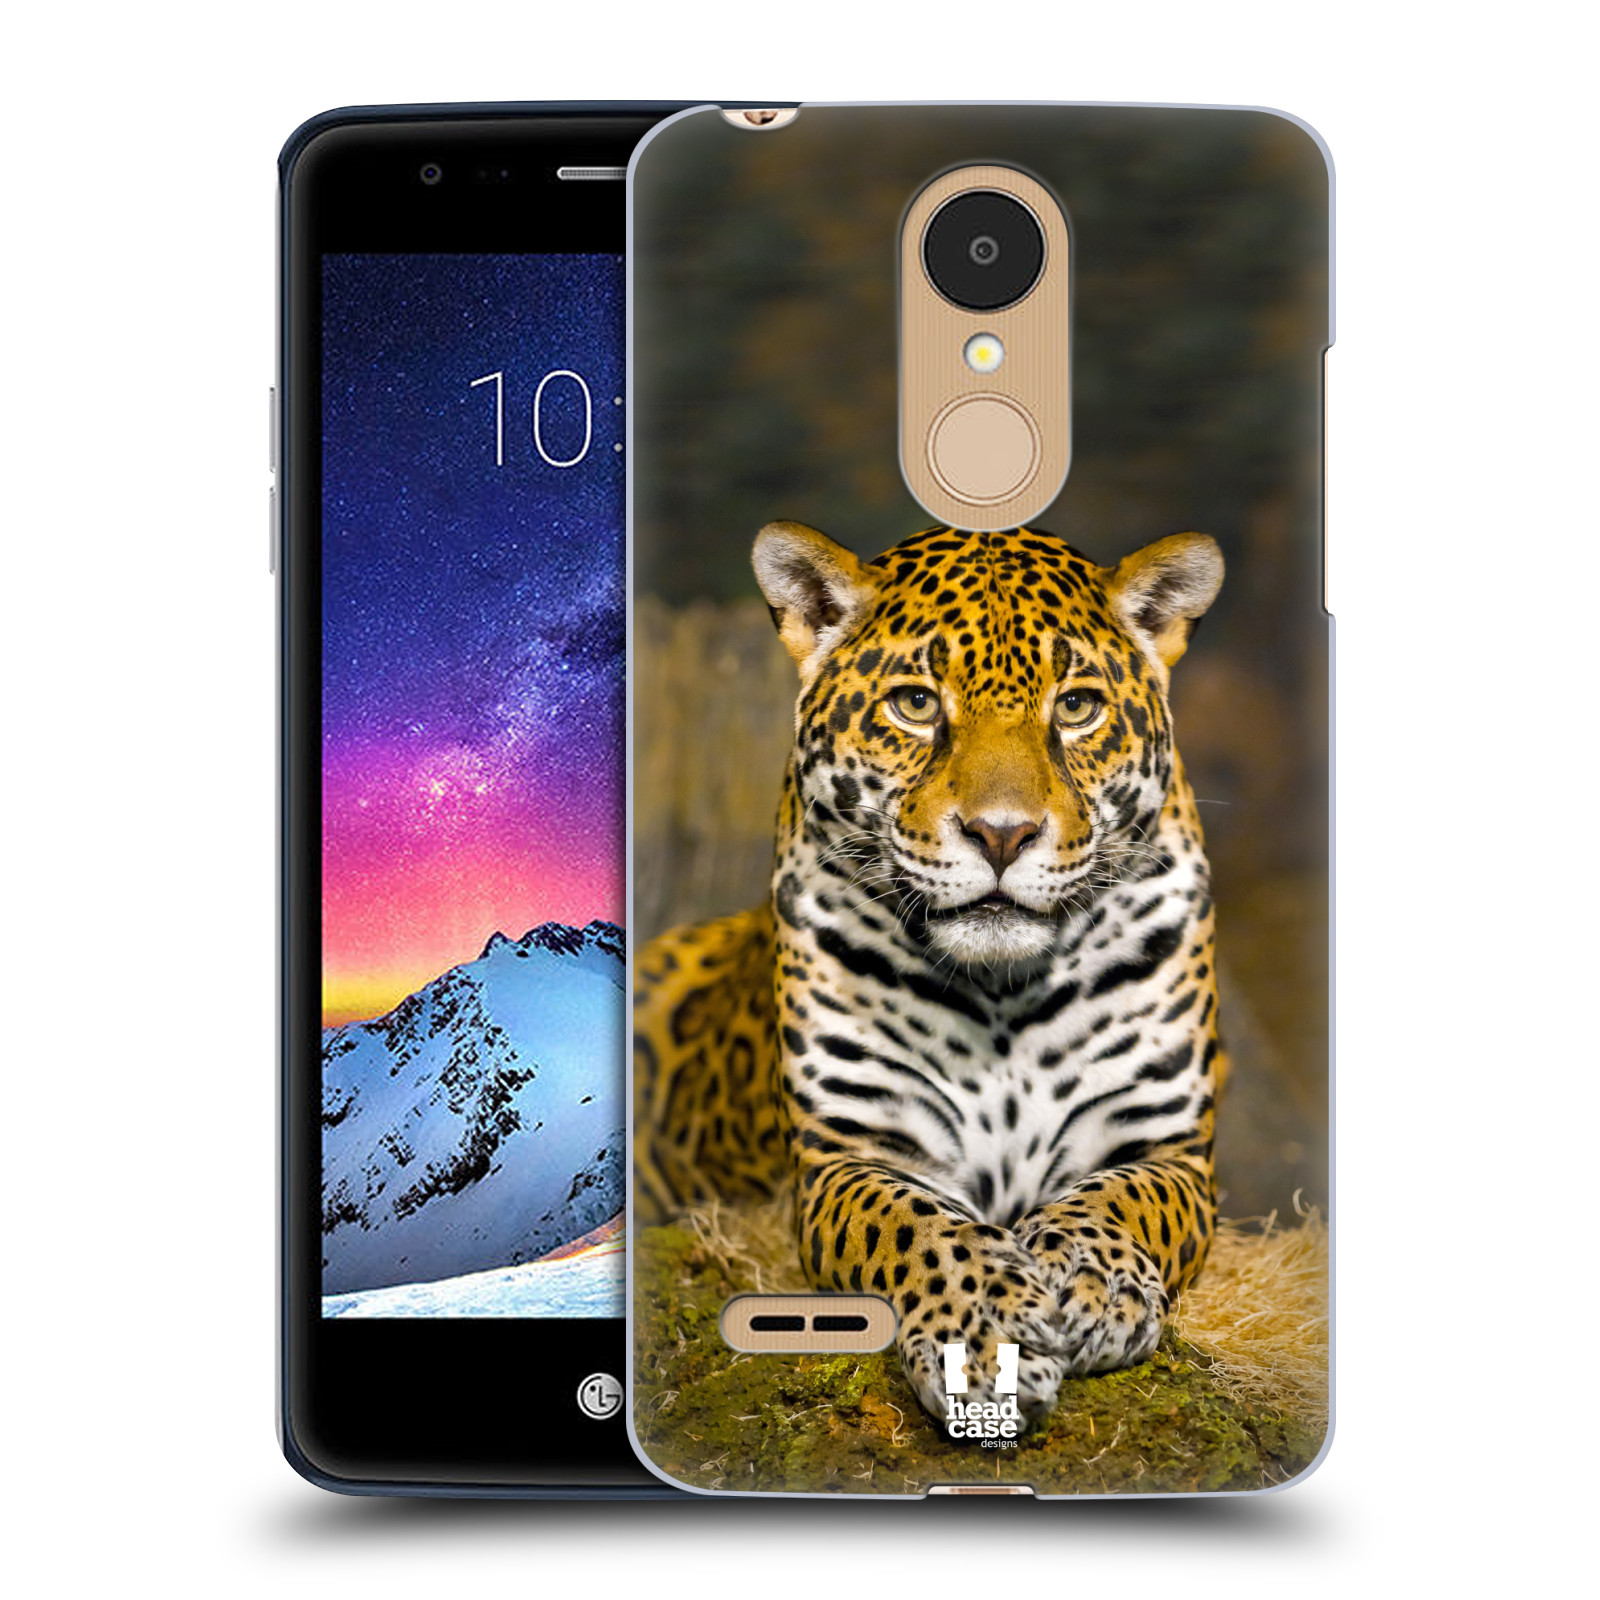 HEAD CASE plastový obal na mobil LG K9 / K8 2018 vzor slavná zvířata foto jaguár